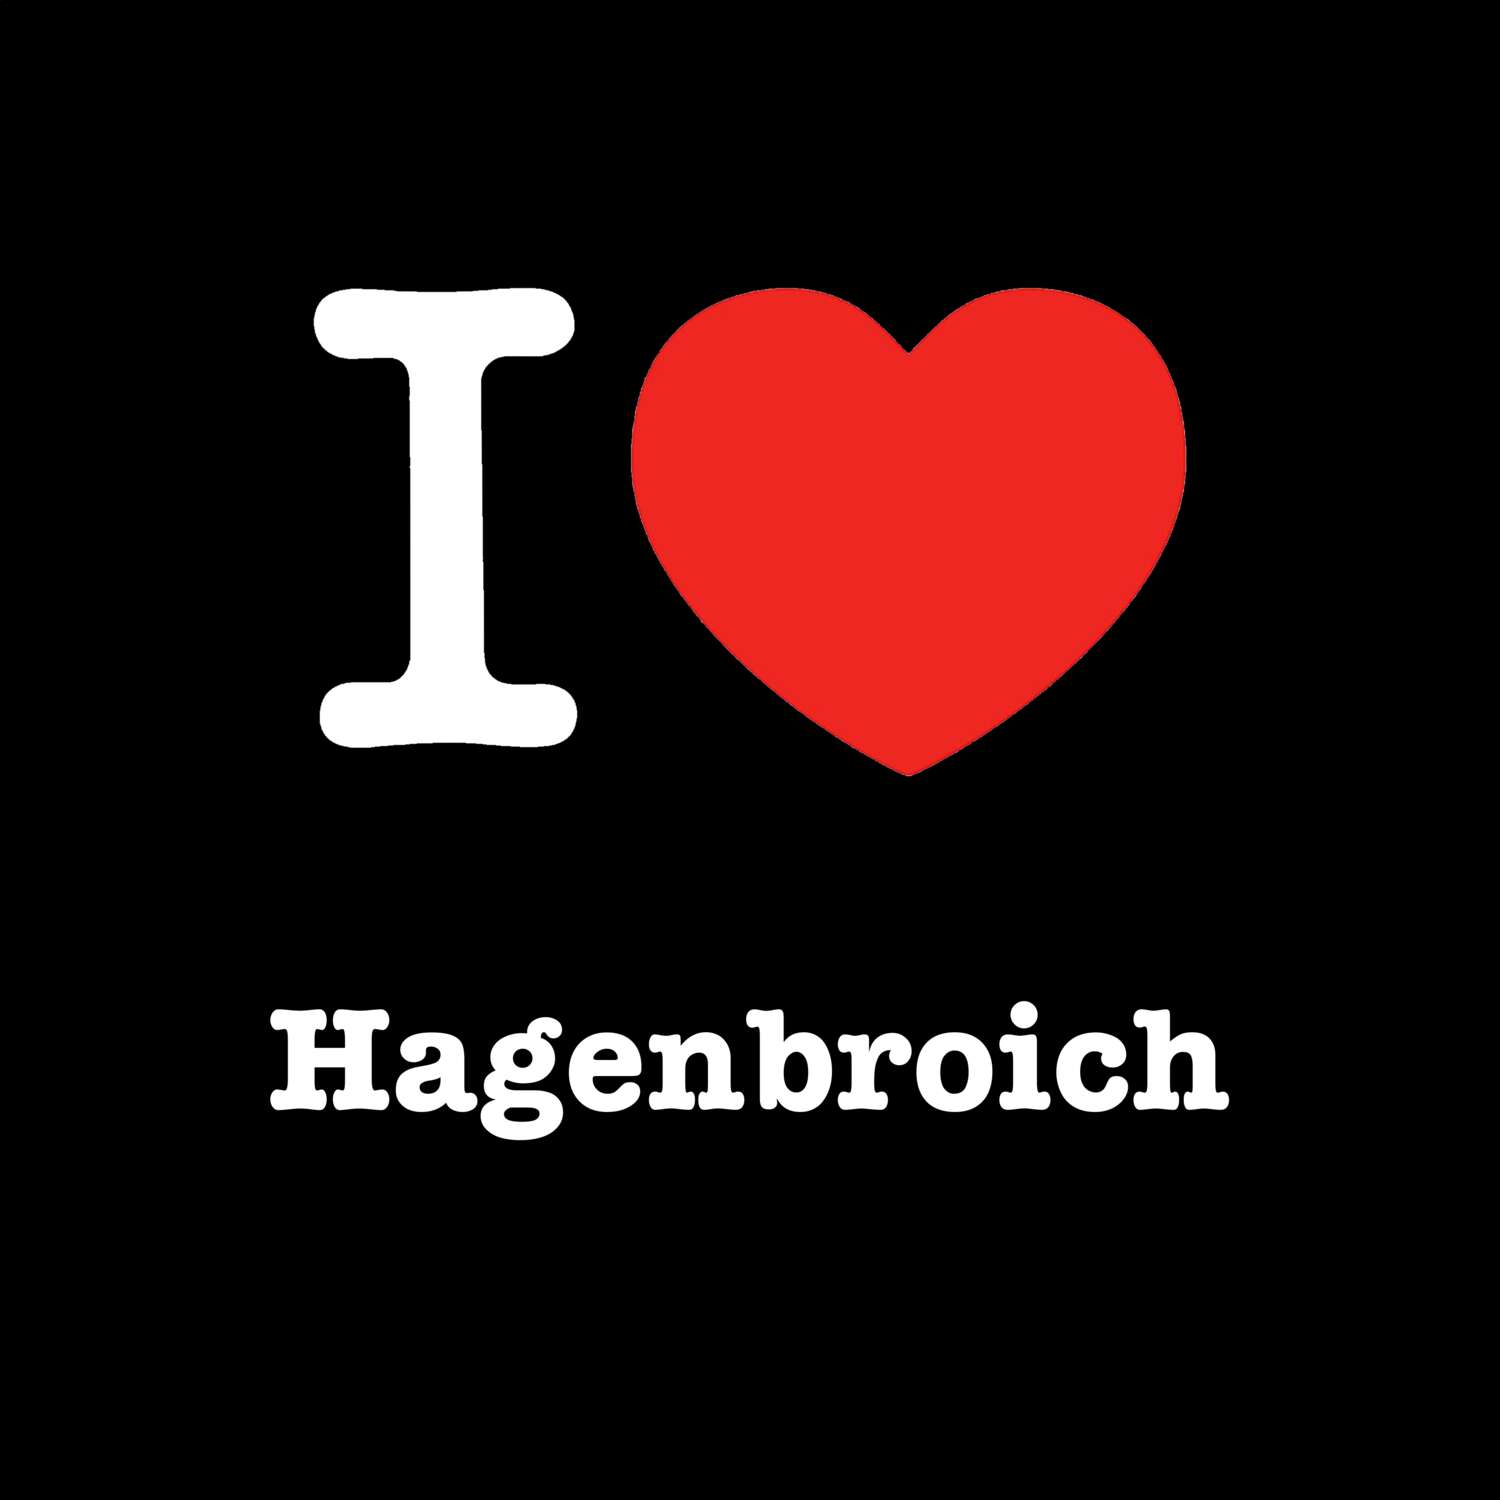 Hagenbroich T-Shirt »I love«